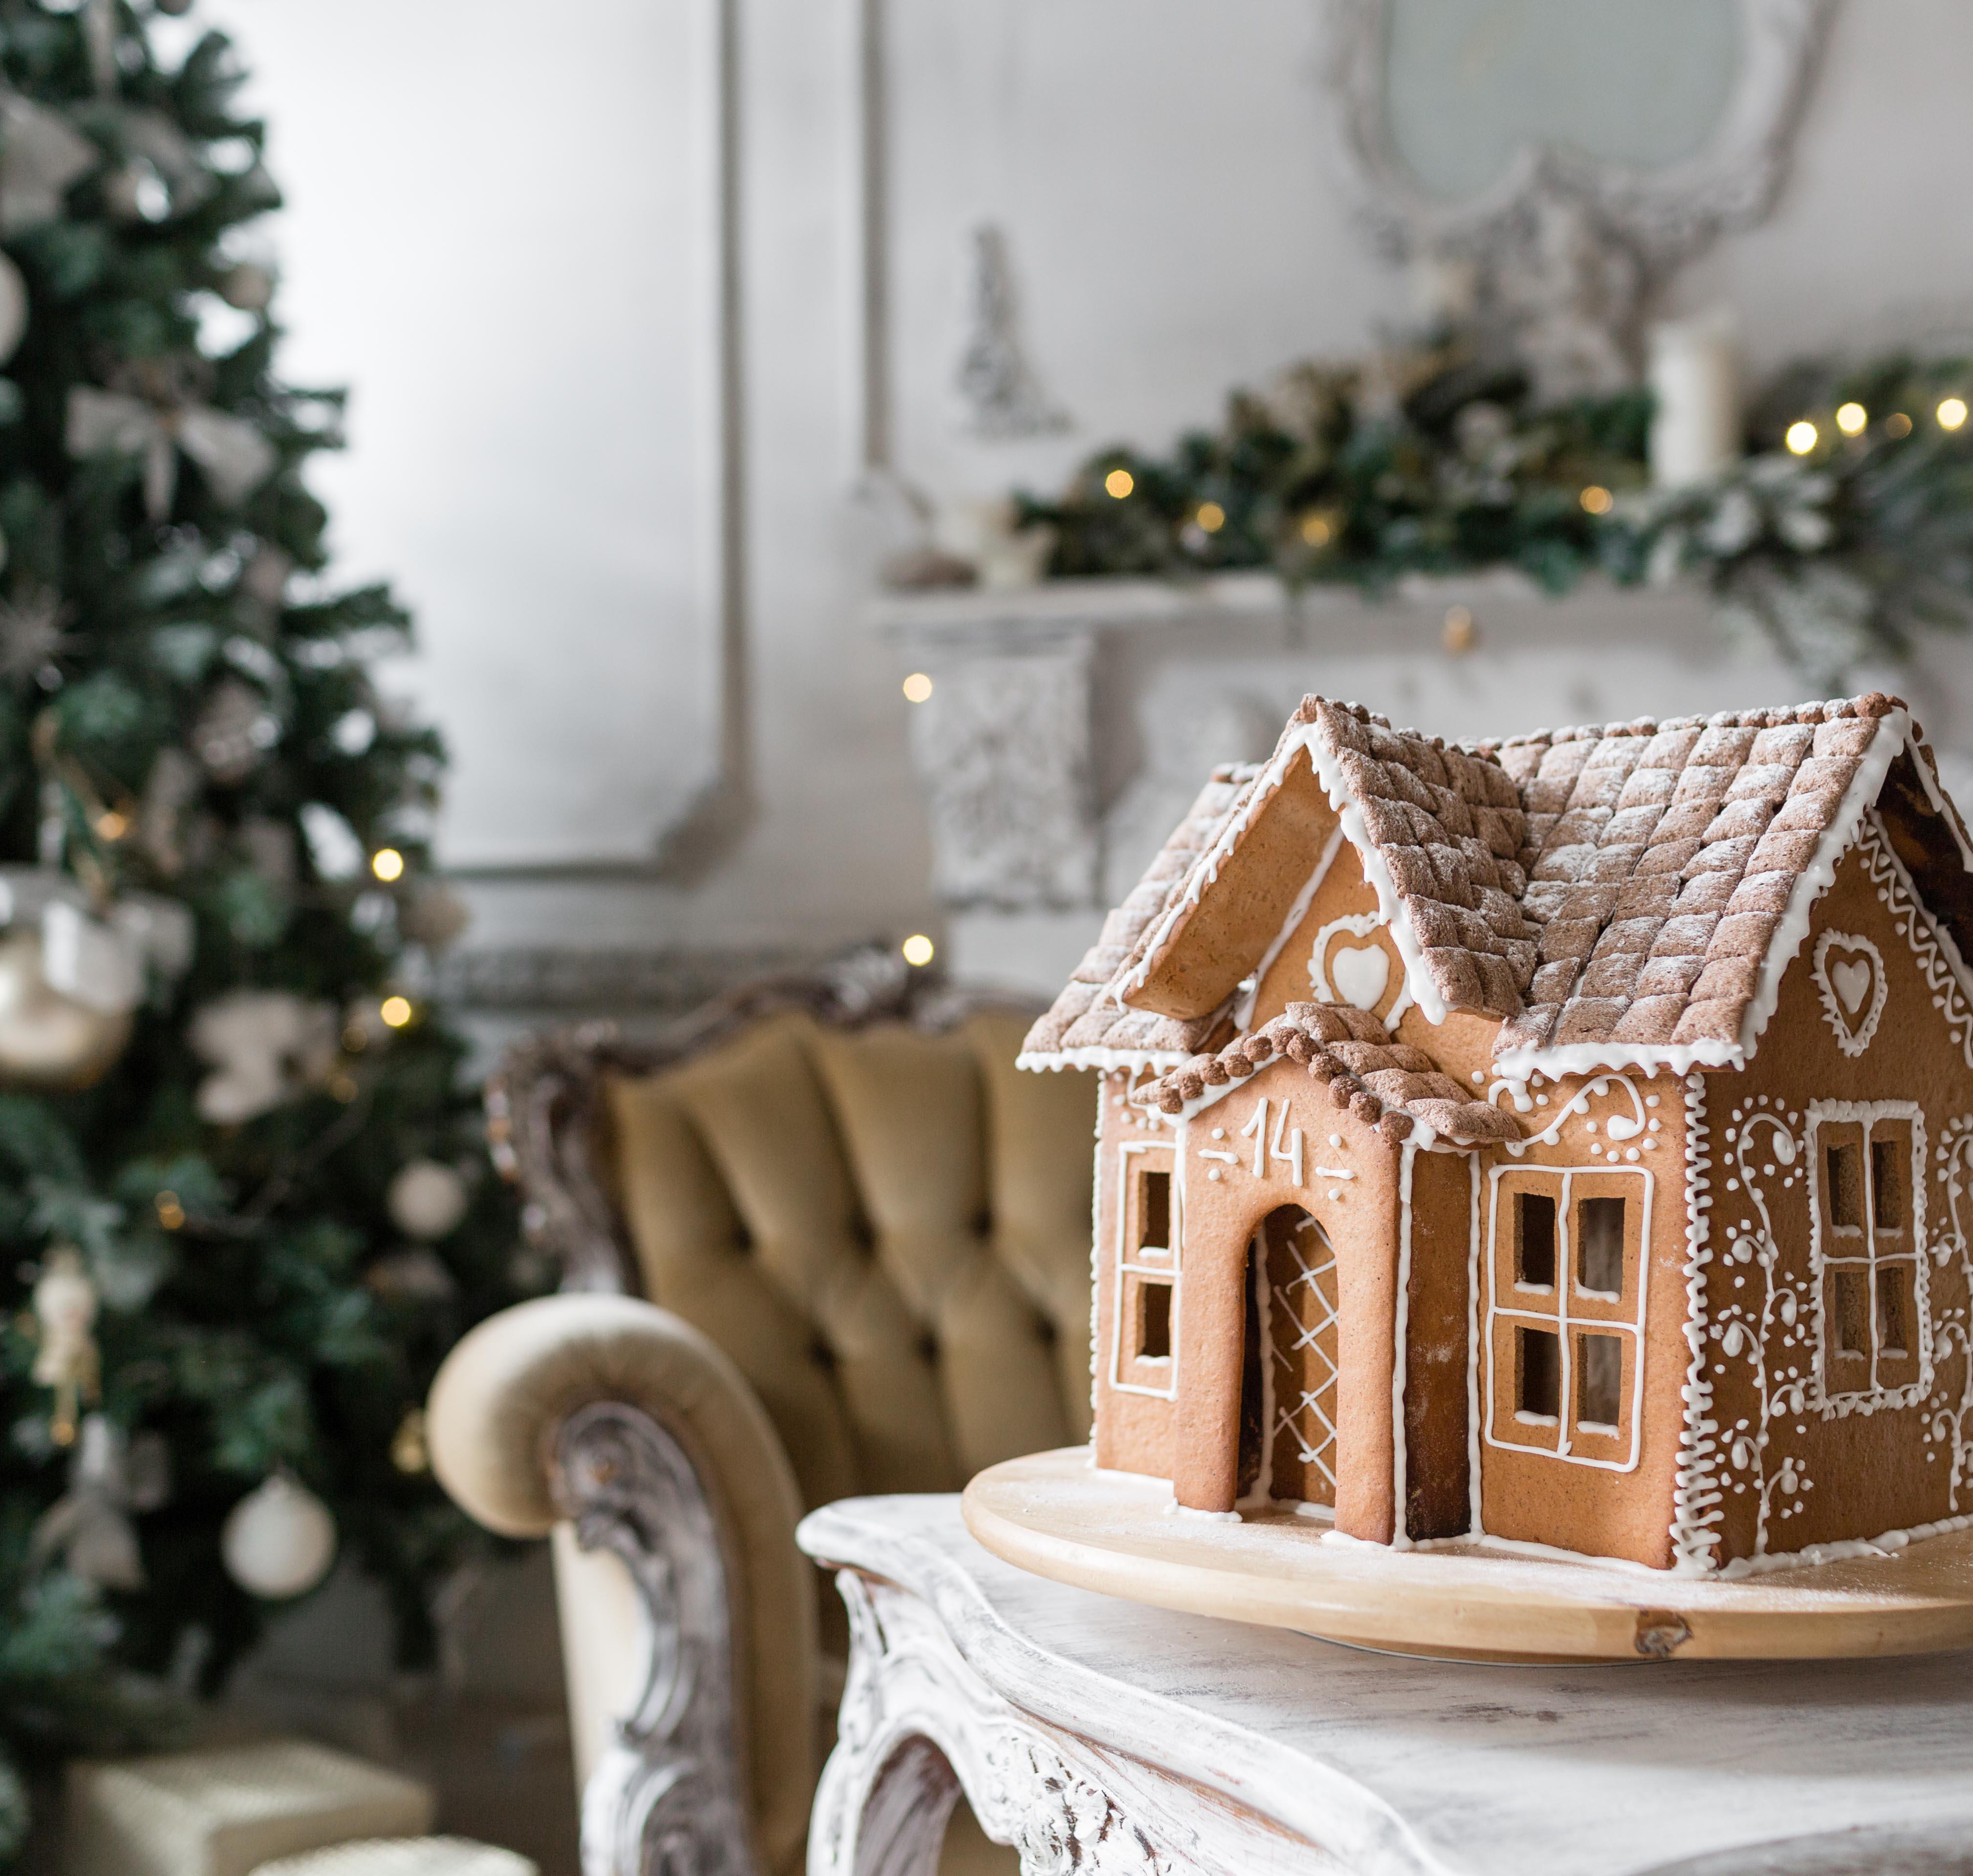 Christmas setting - gingerbread house